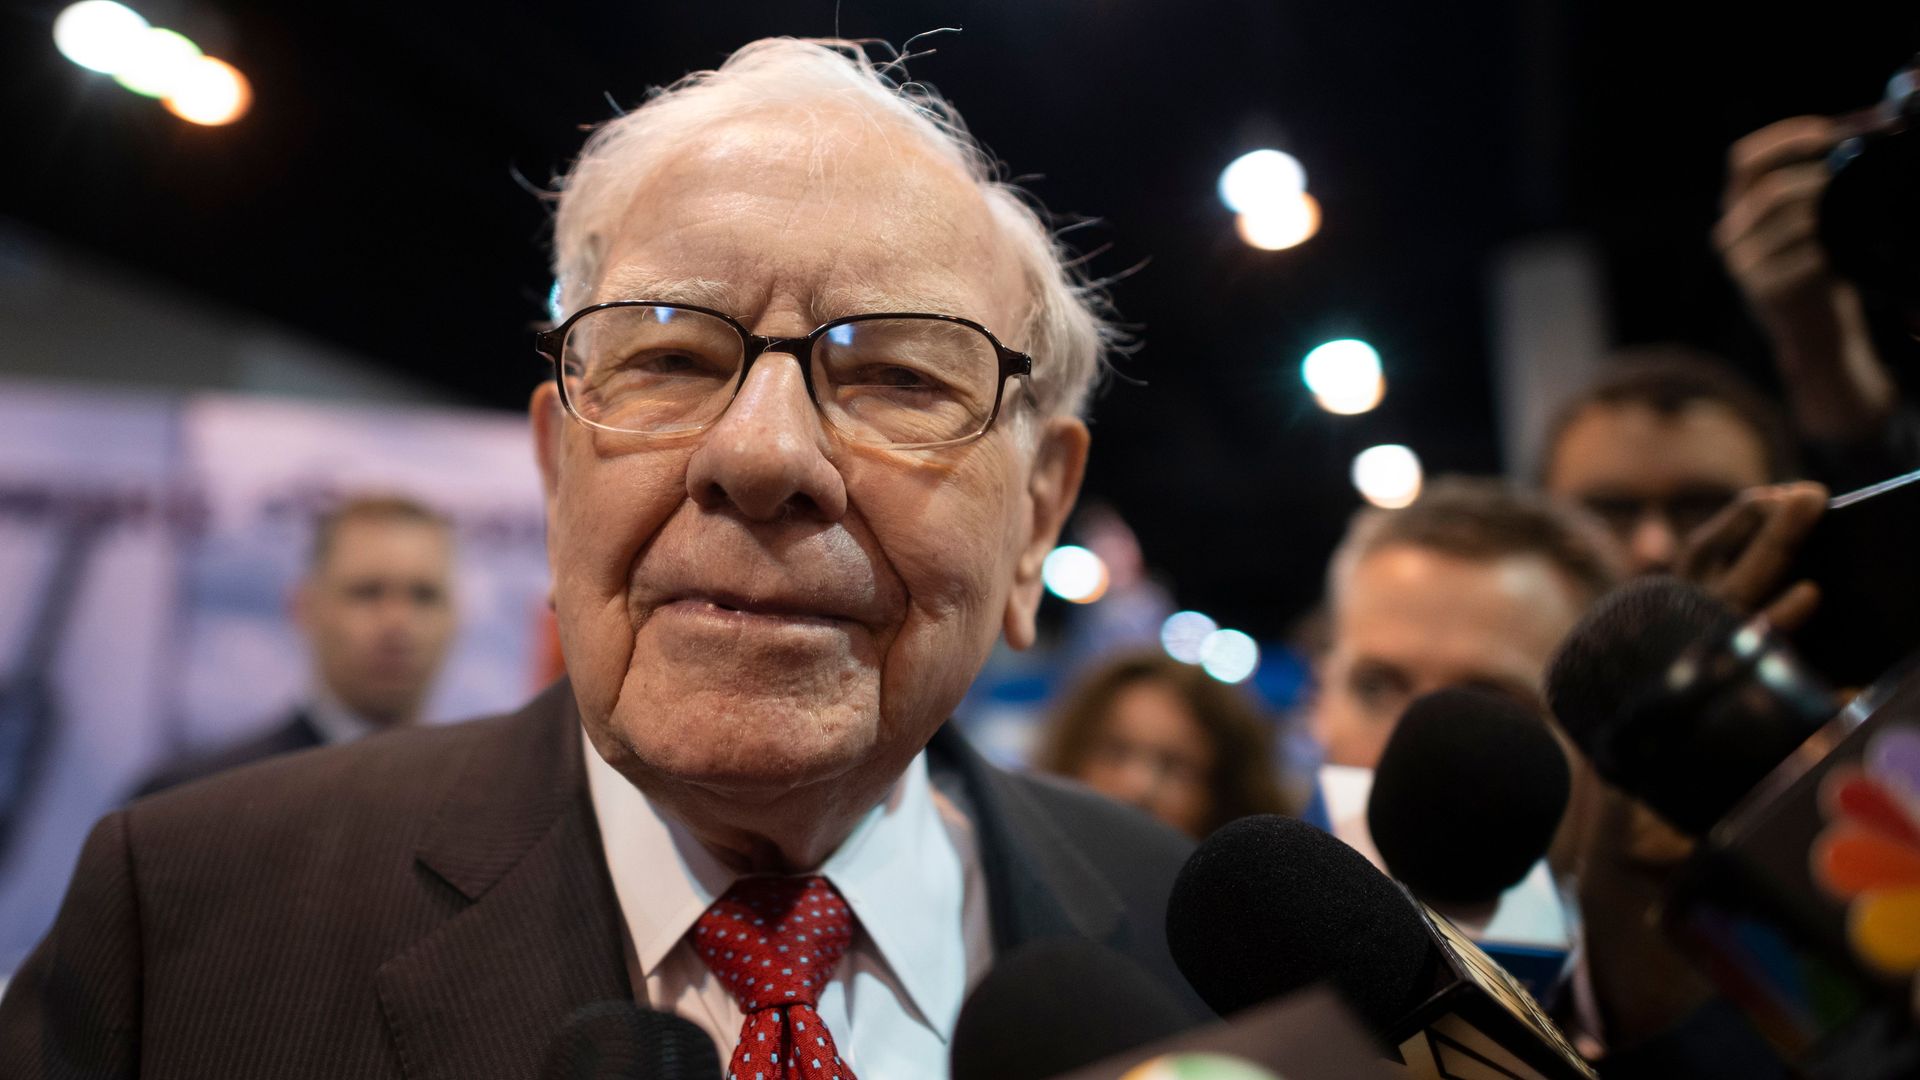 In this image, Warren Buffett stands in front of microphones